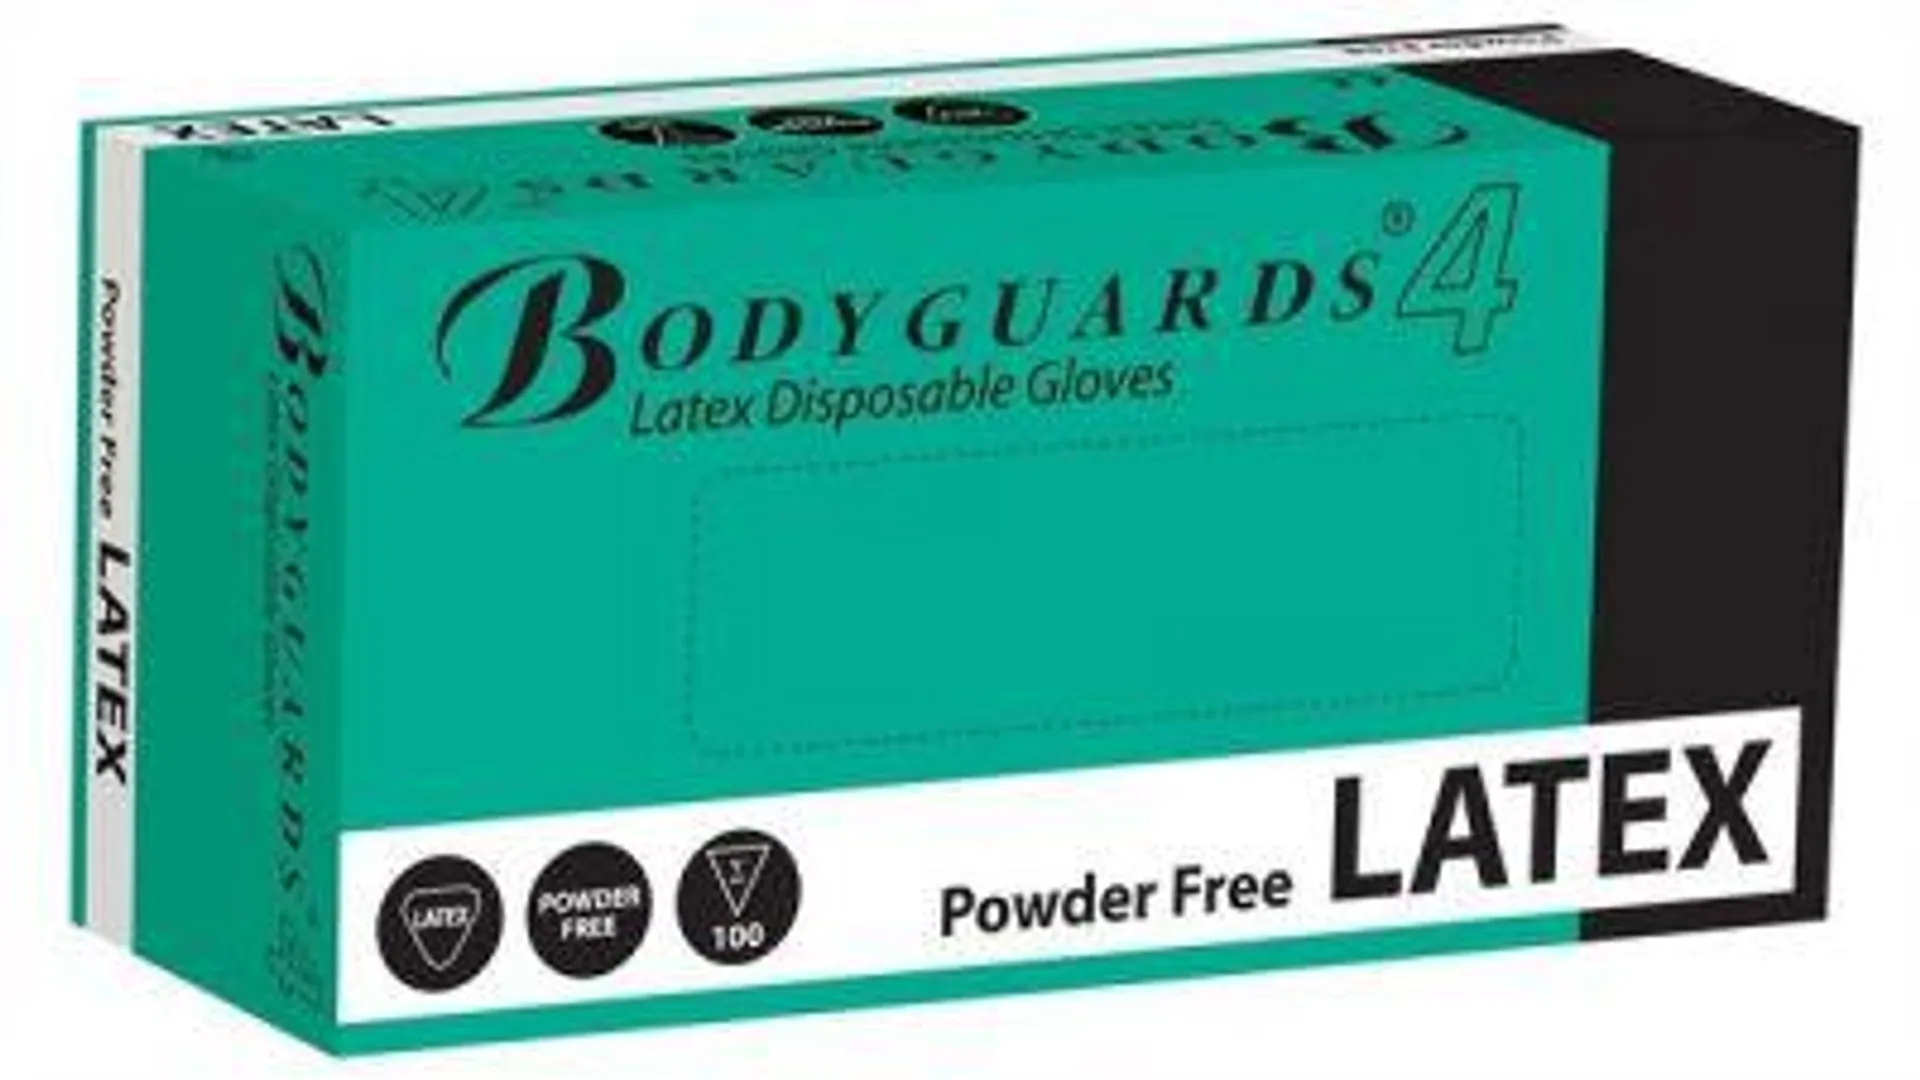 saville latex powder free gloves medium - x 100